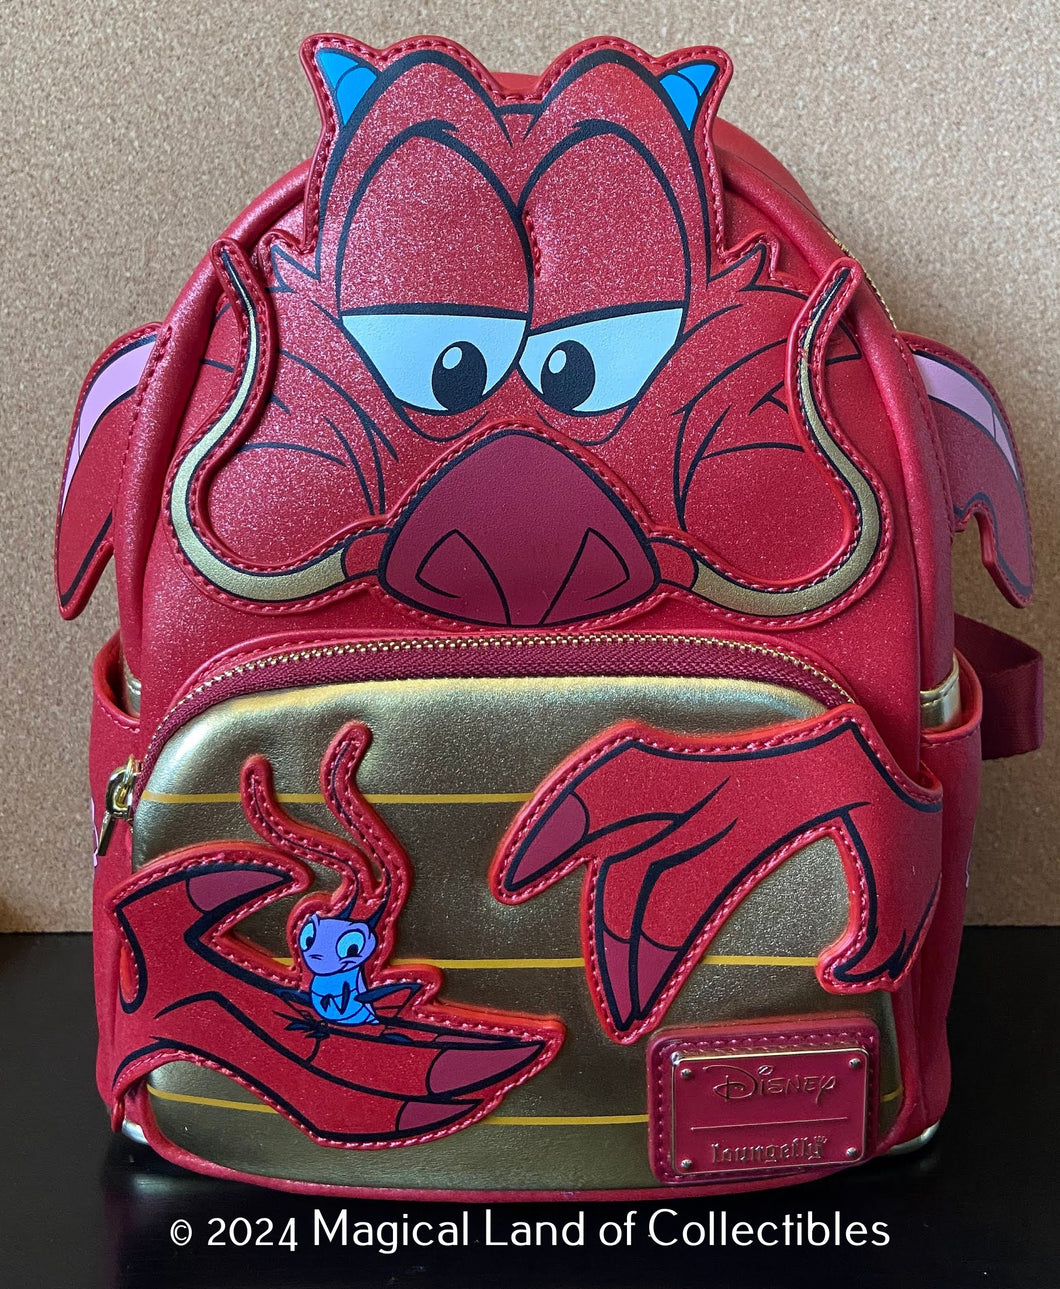 Loungefly Mulan 25th Anniversary Mushu Glitter Cosplay Mini Backpack